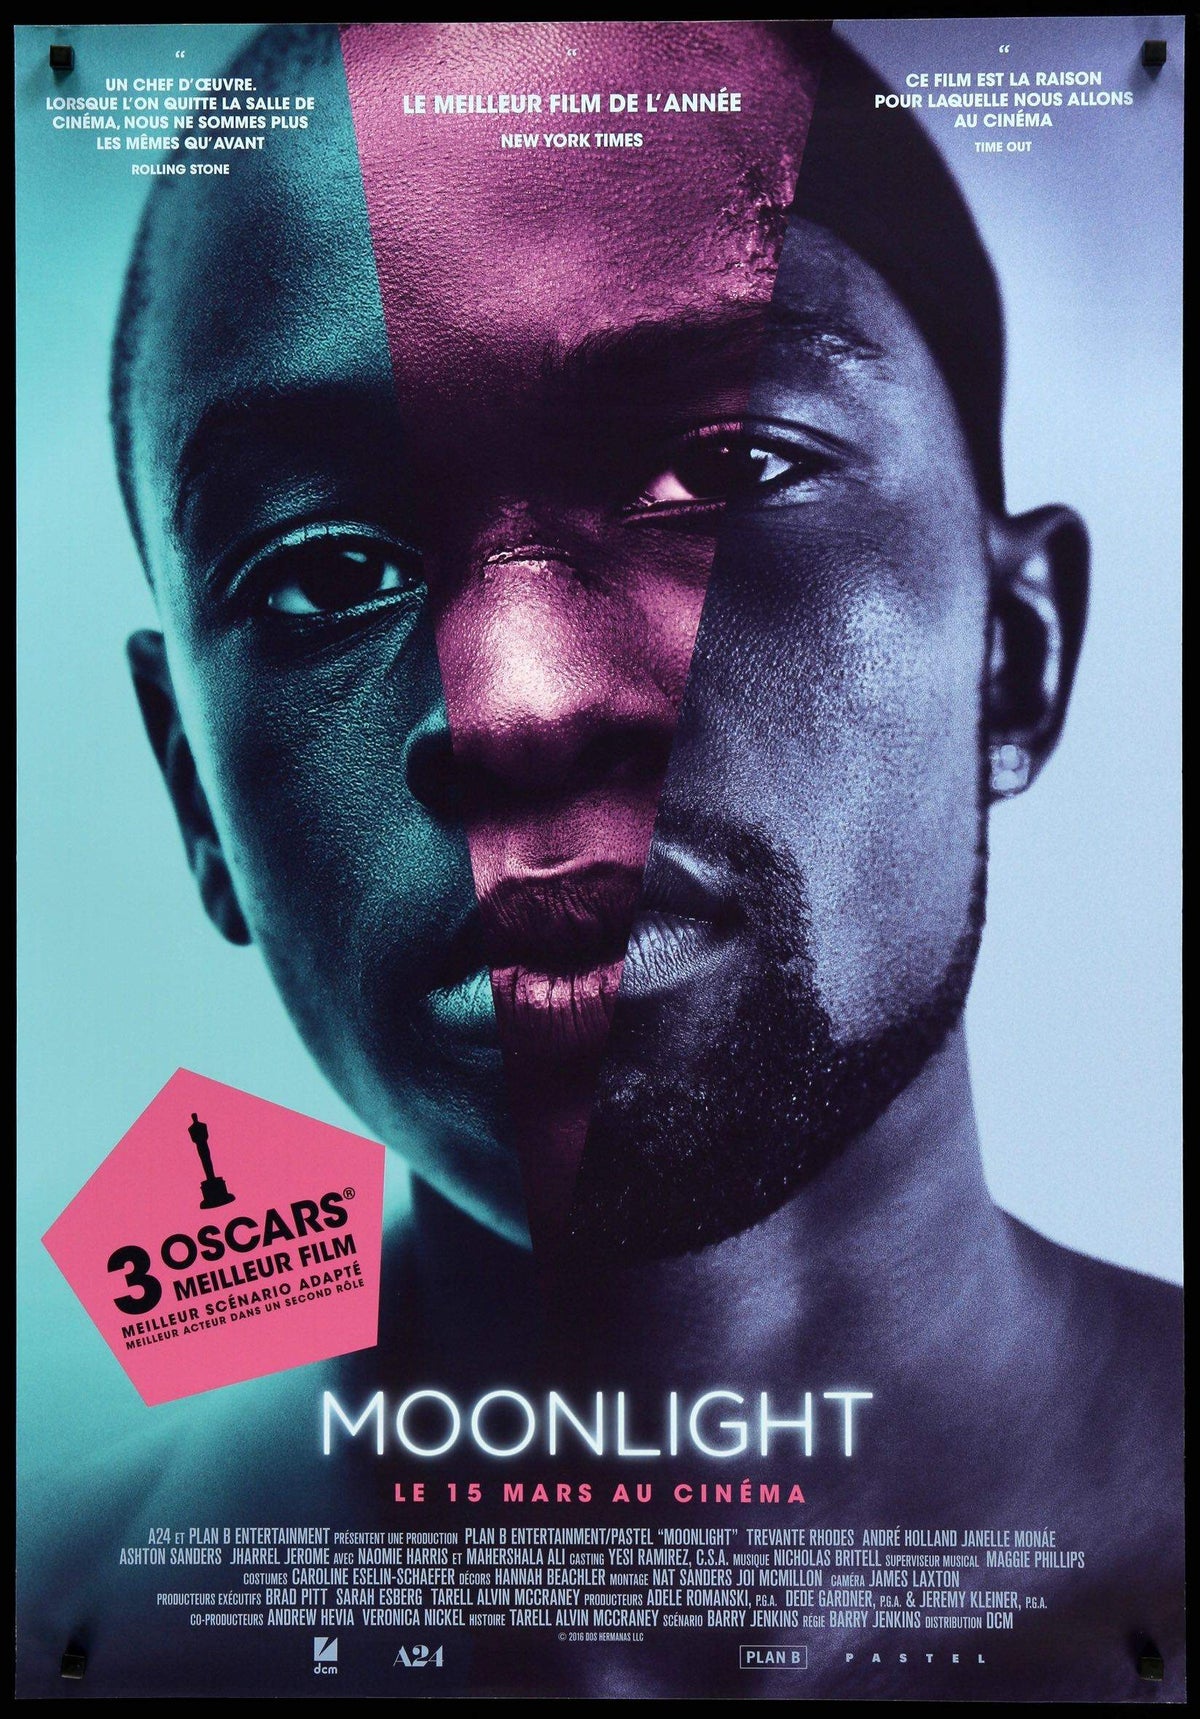 Moonlight (2016) original movie poster for sale at Original Film Art